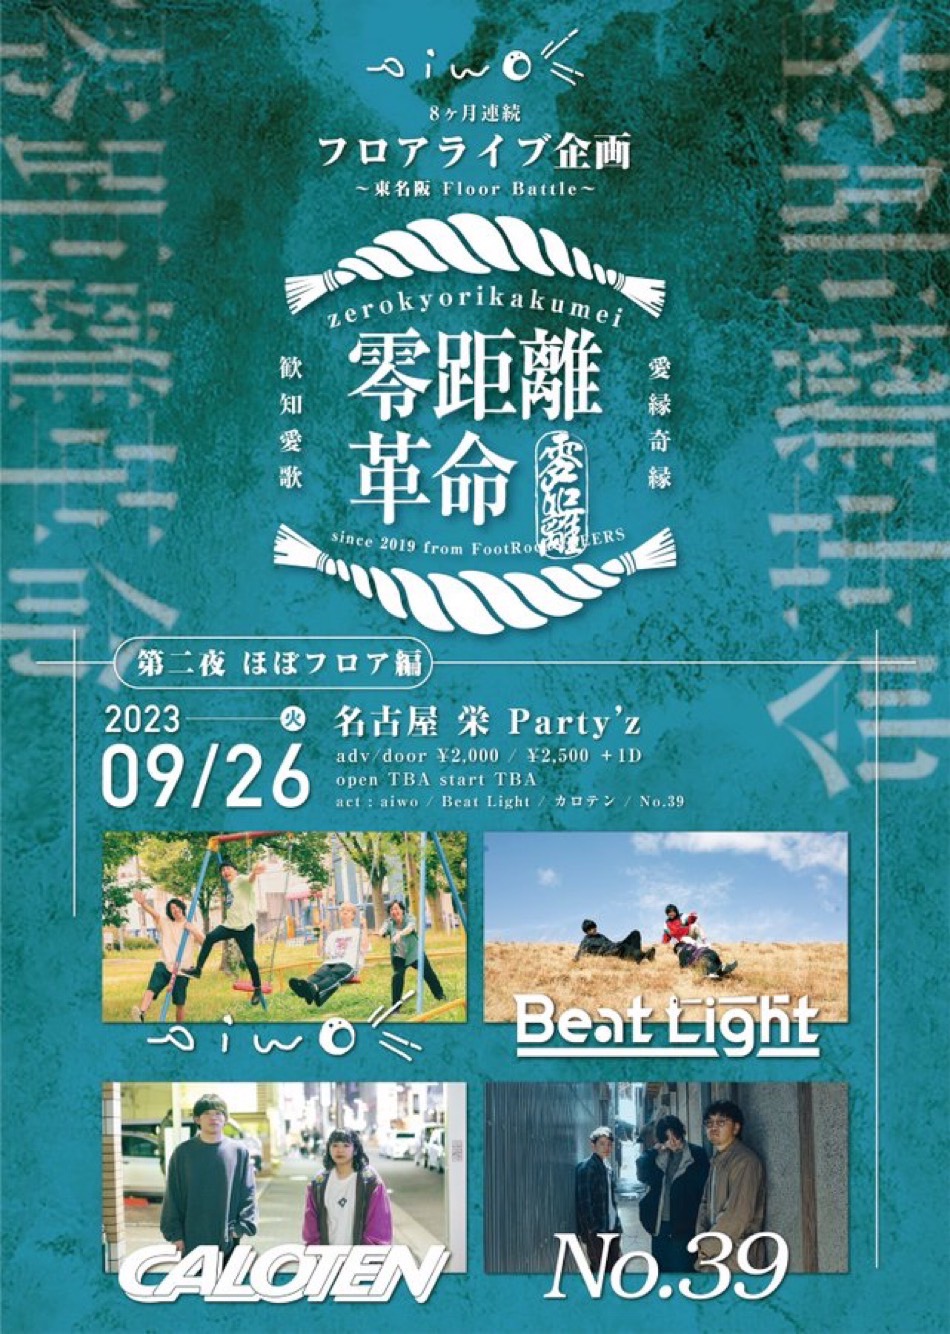 aiwo 8ヶ月連続フロア企画  『零距離革命』~ 東名阪 Floor Battle  ~ "第二夜 ほぼフロア編"